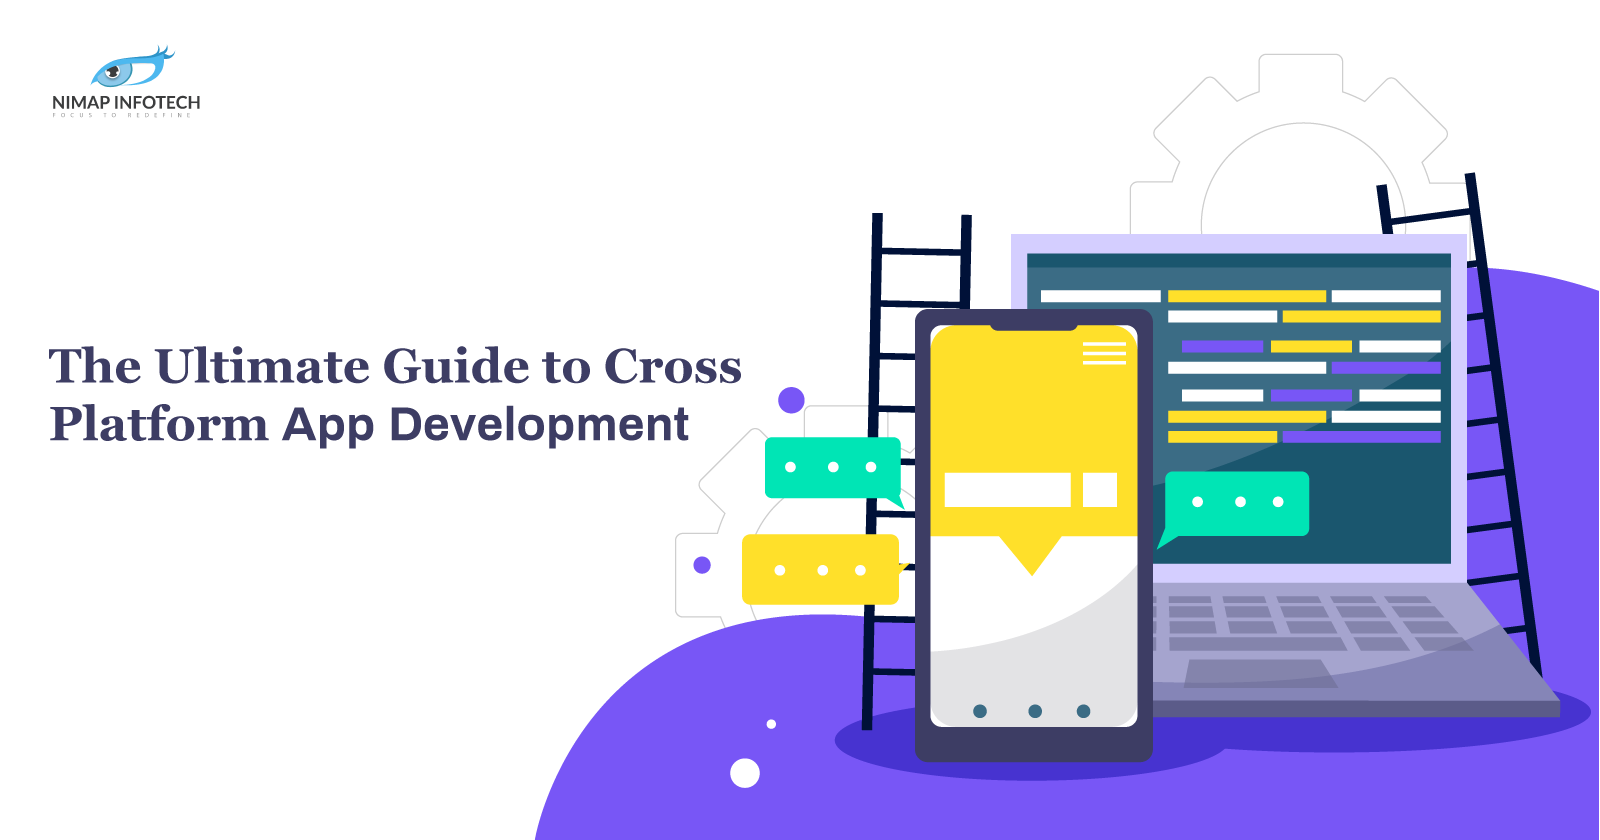 The Ultimate Guide to Cross Platform App Development